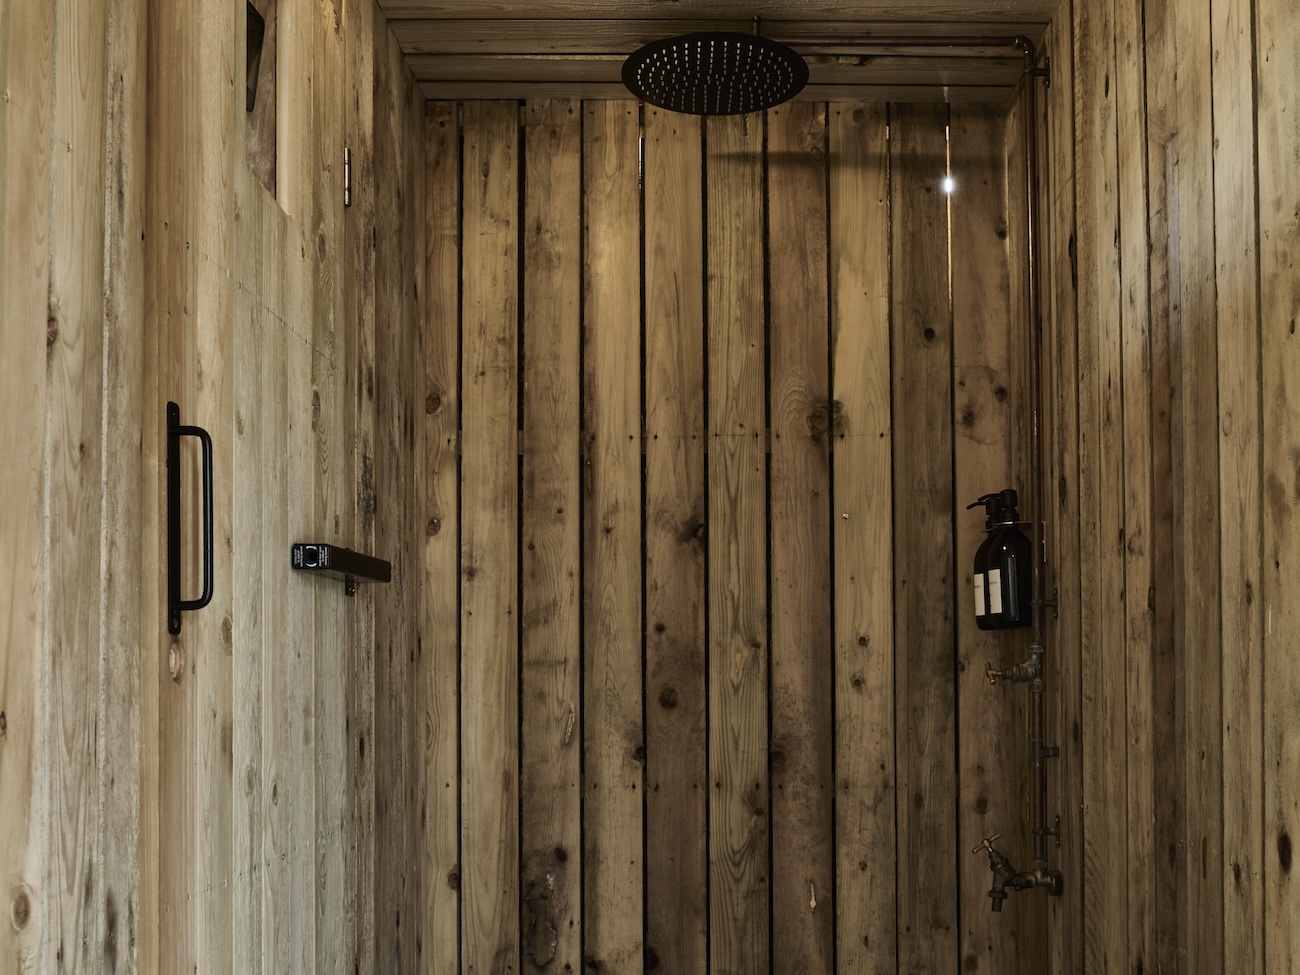 Private showers in every sauna cabin